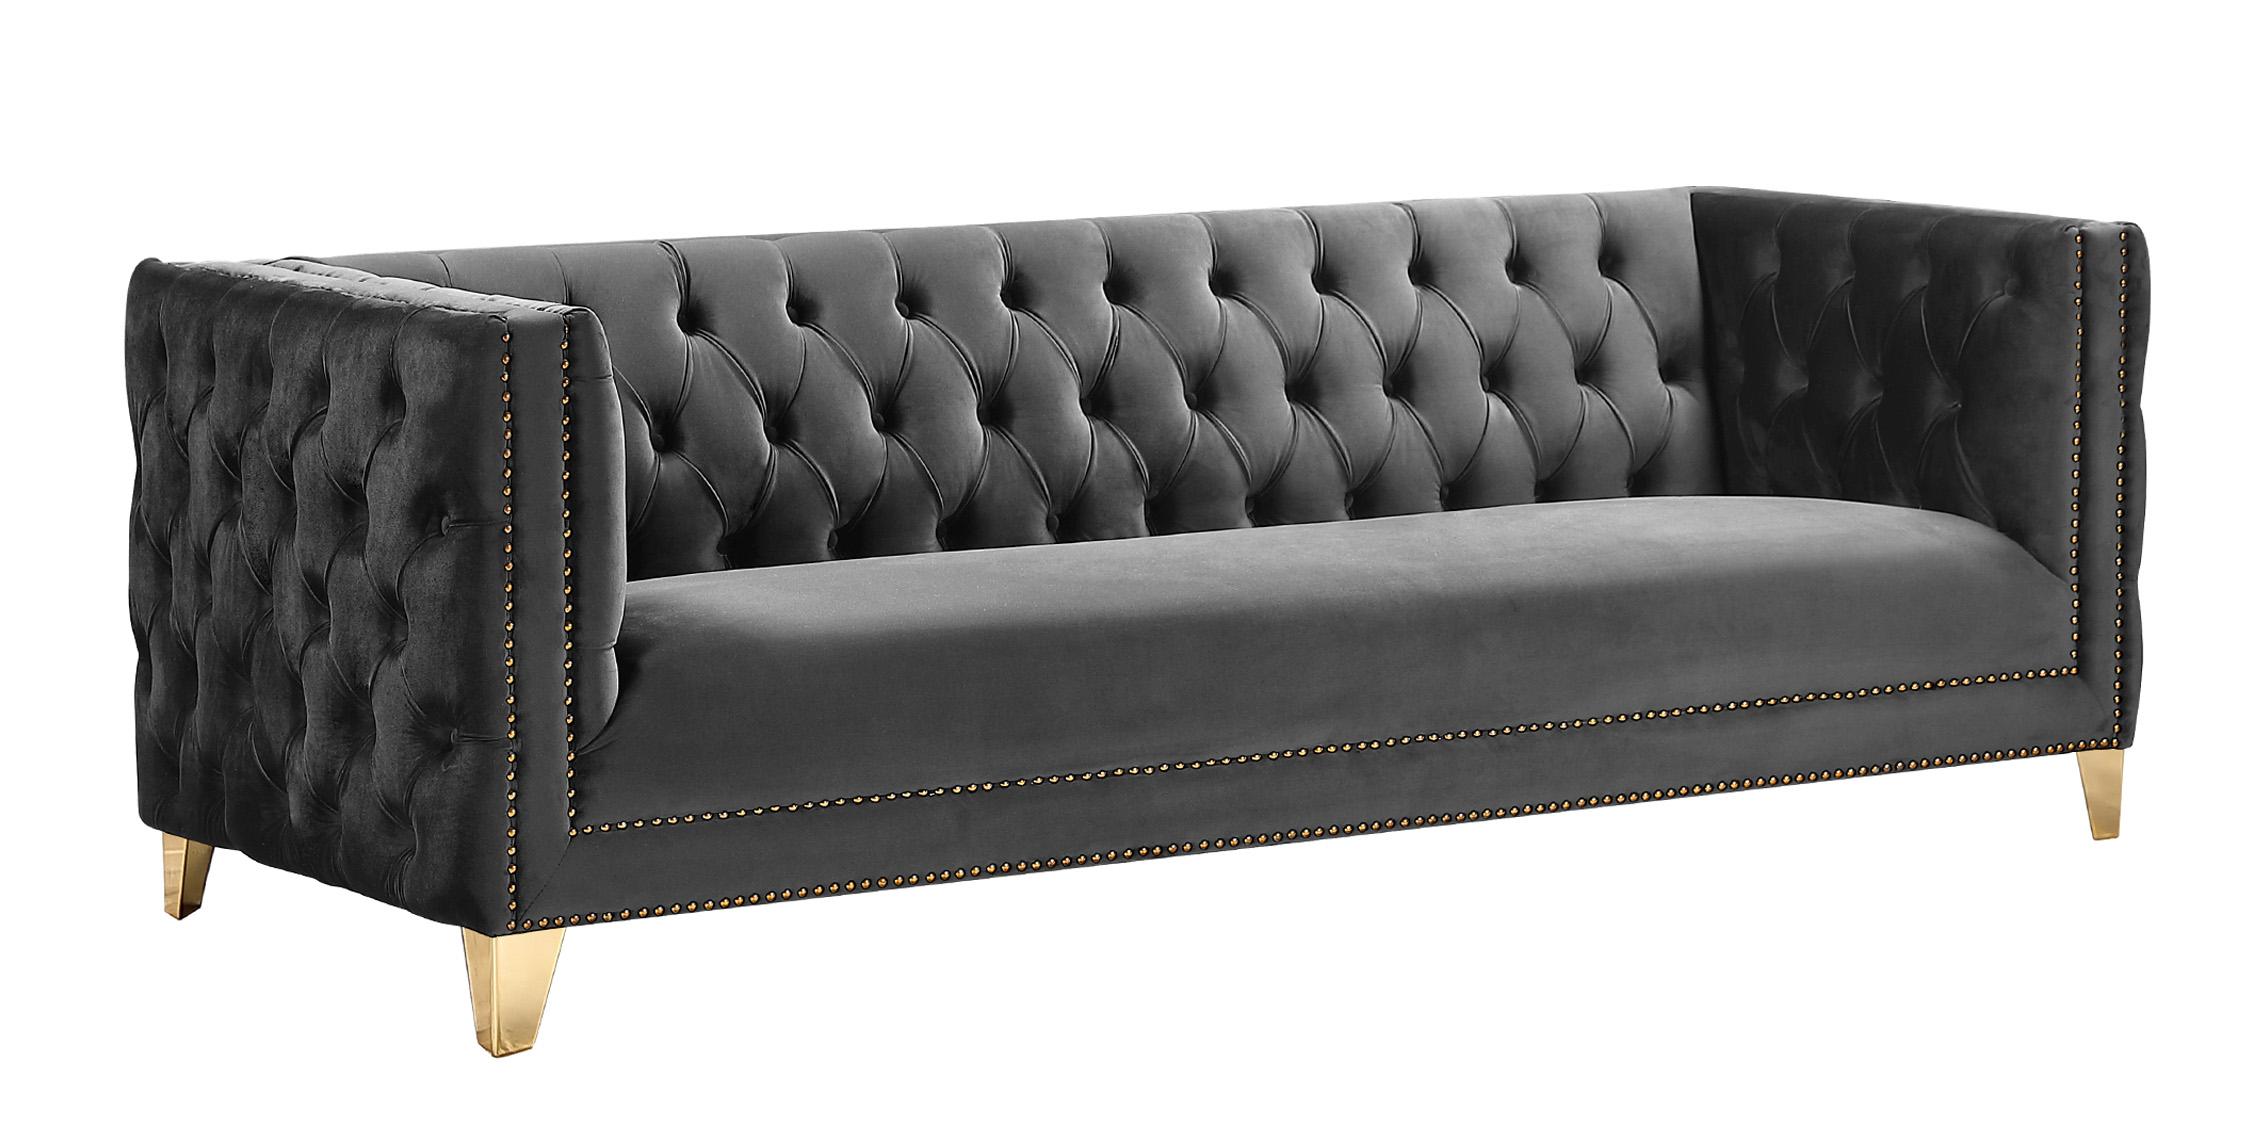 Contemporary, Modern Sofa MICHELLE 652Grey-S 652Grey-S in Gray Velvet